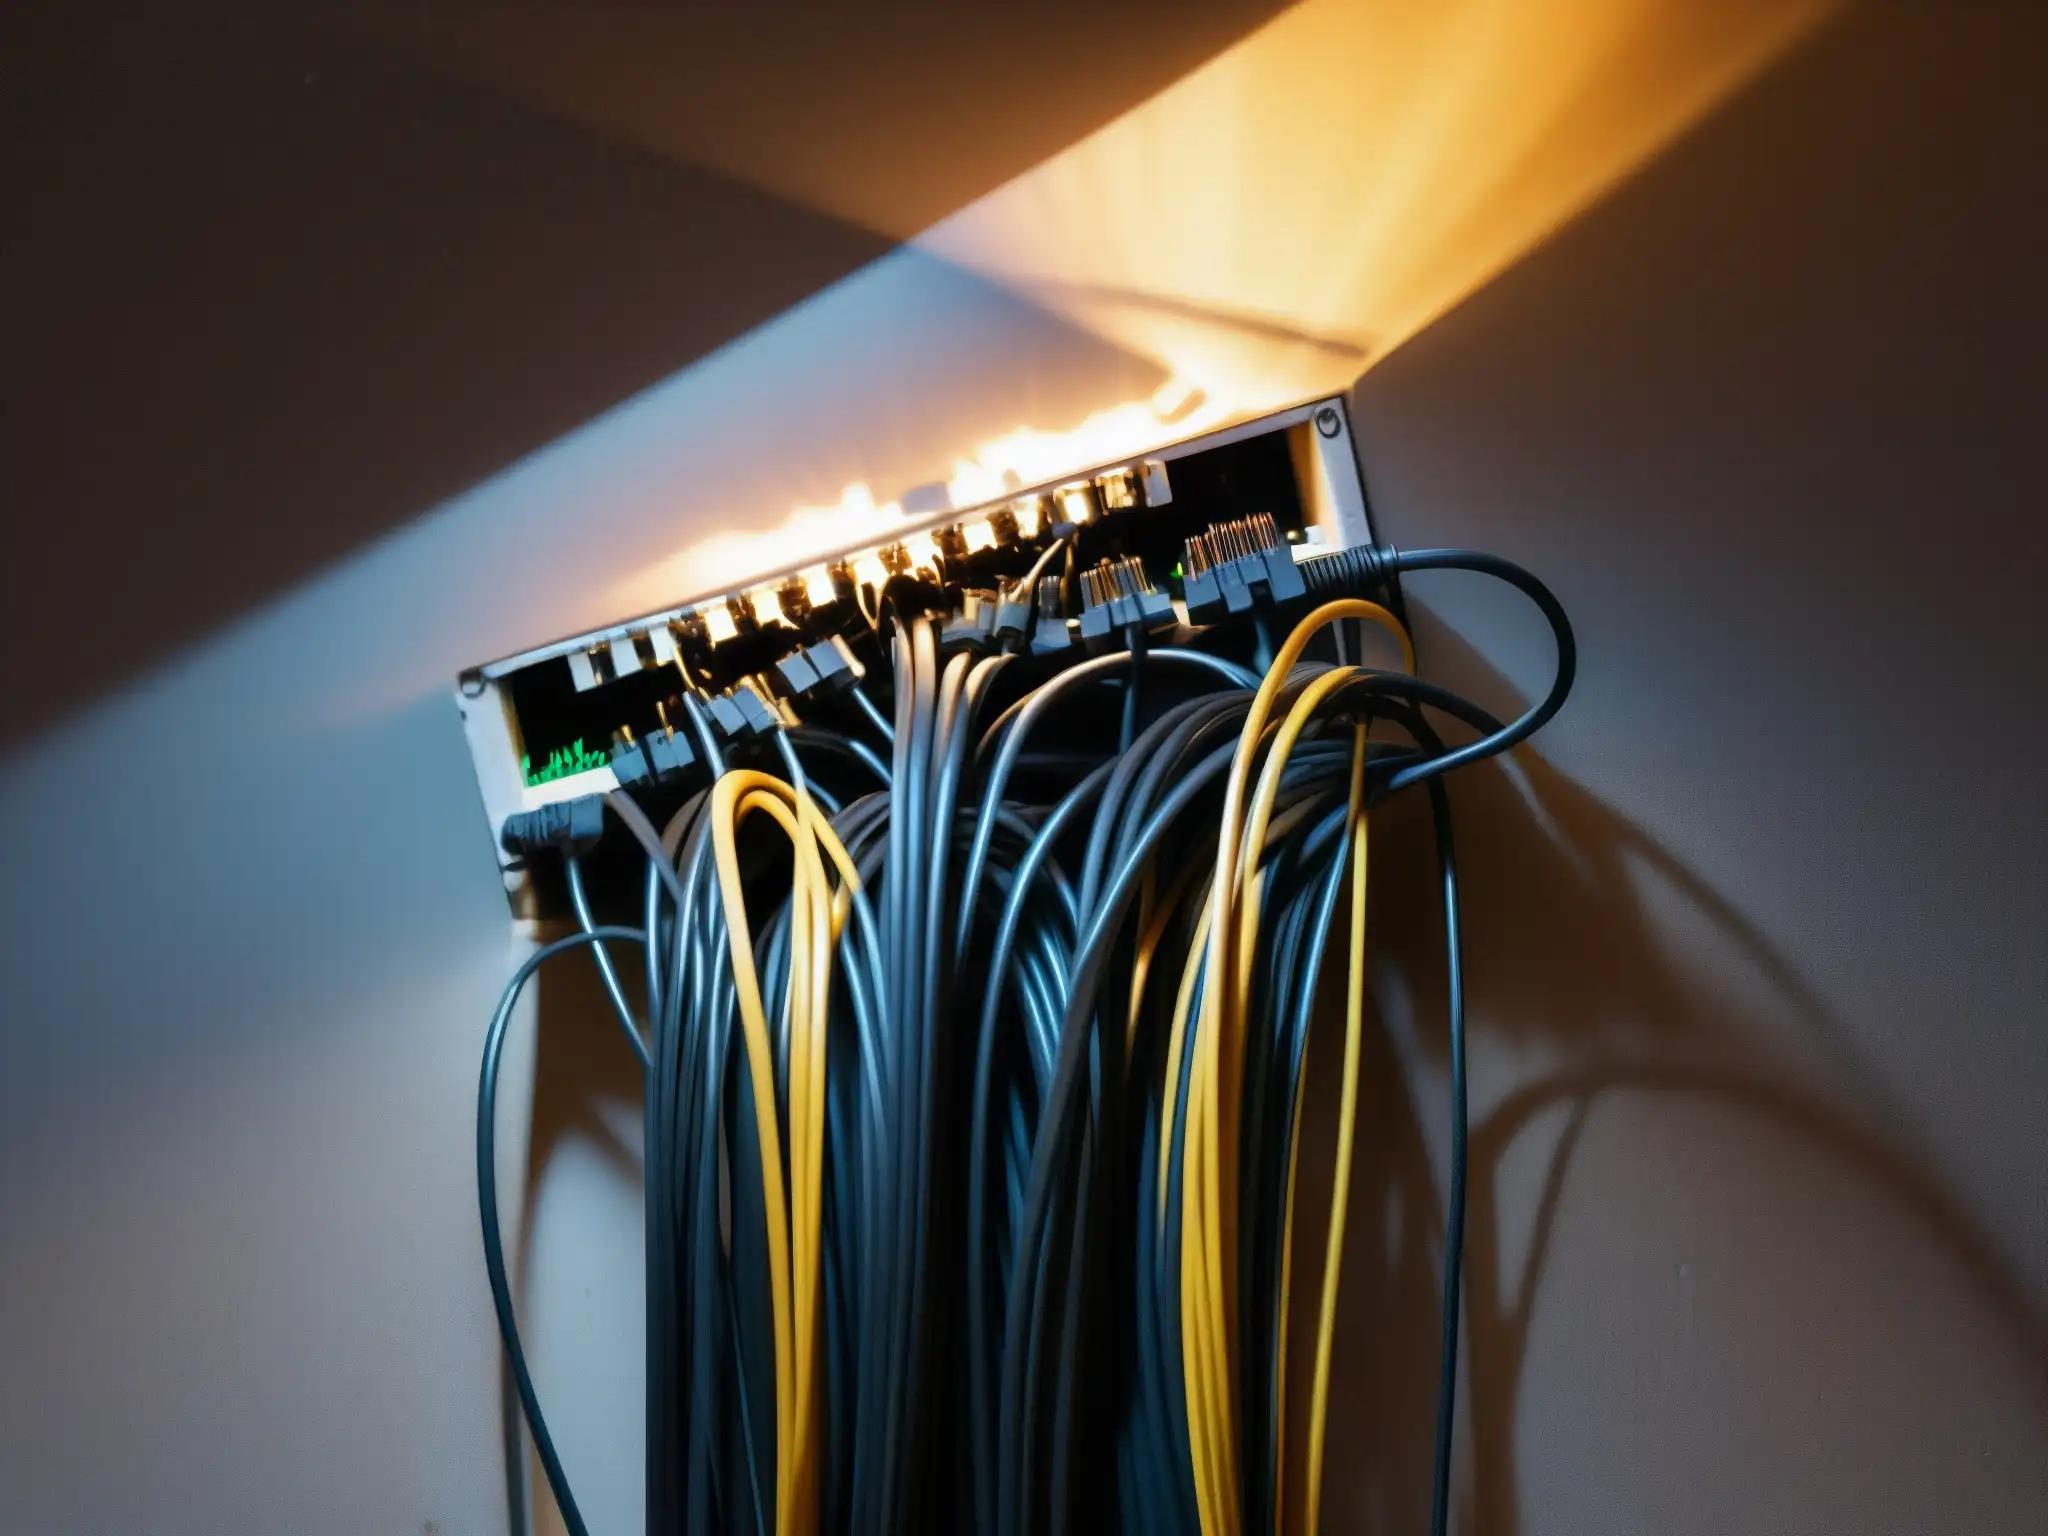 Enredado caos de cables Ethernet con polvo y telarañas, evocando leyendas urbanas redes WiFi Bluetooth